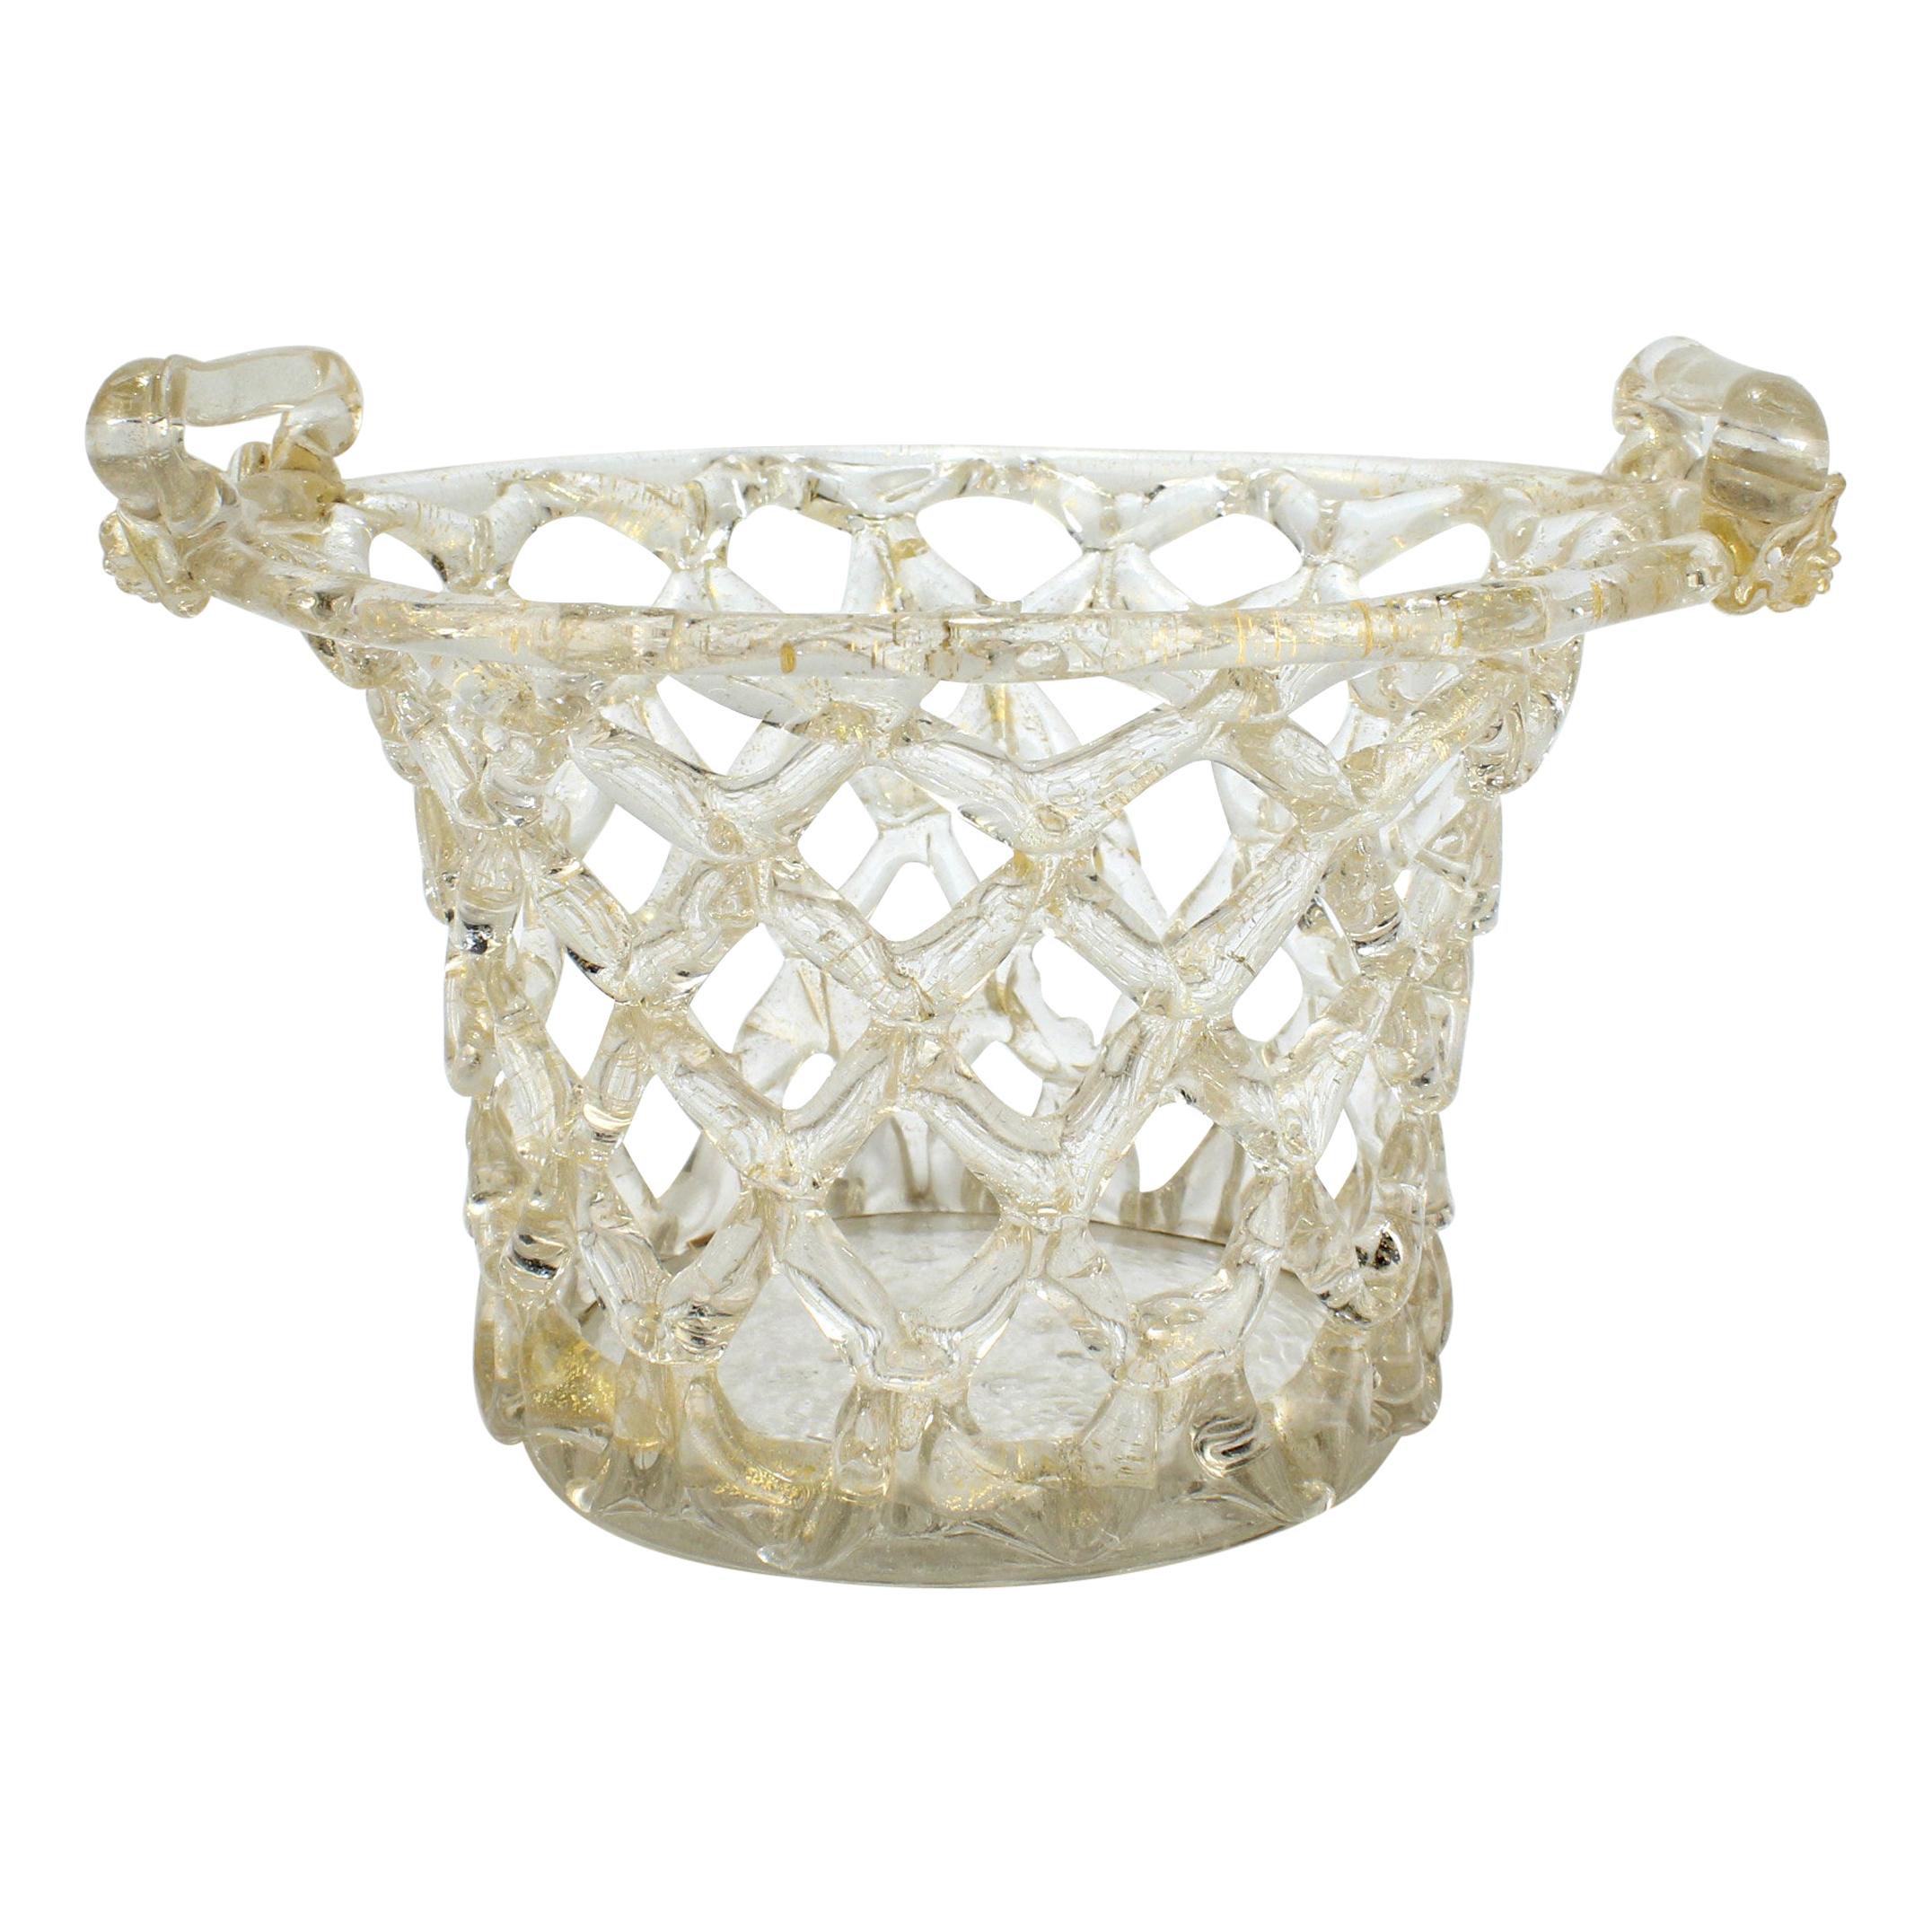 Venetian or Murano Glass Liege a Traforato Openwork Basket with Gold Foil